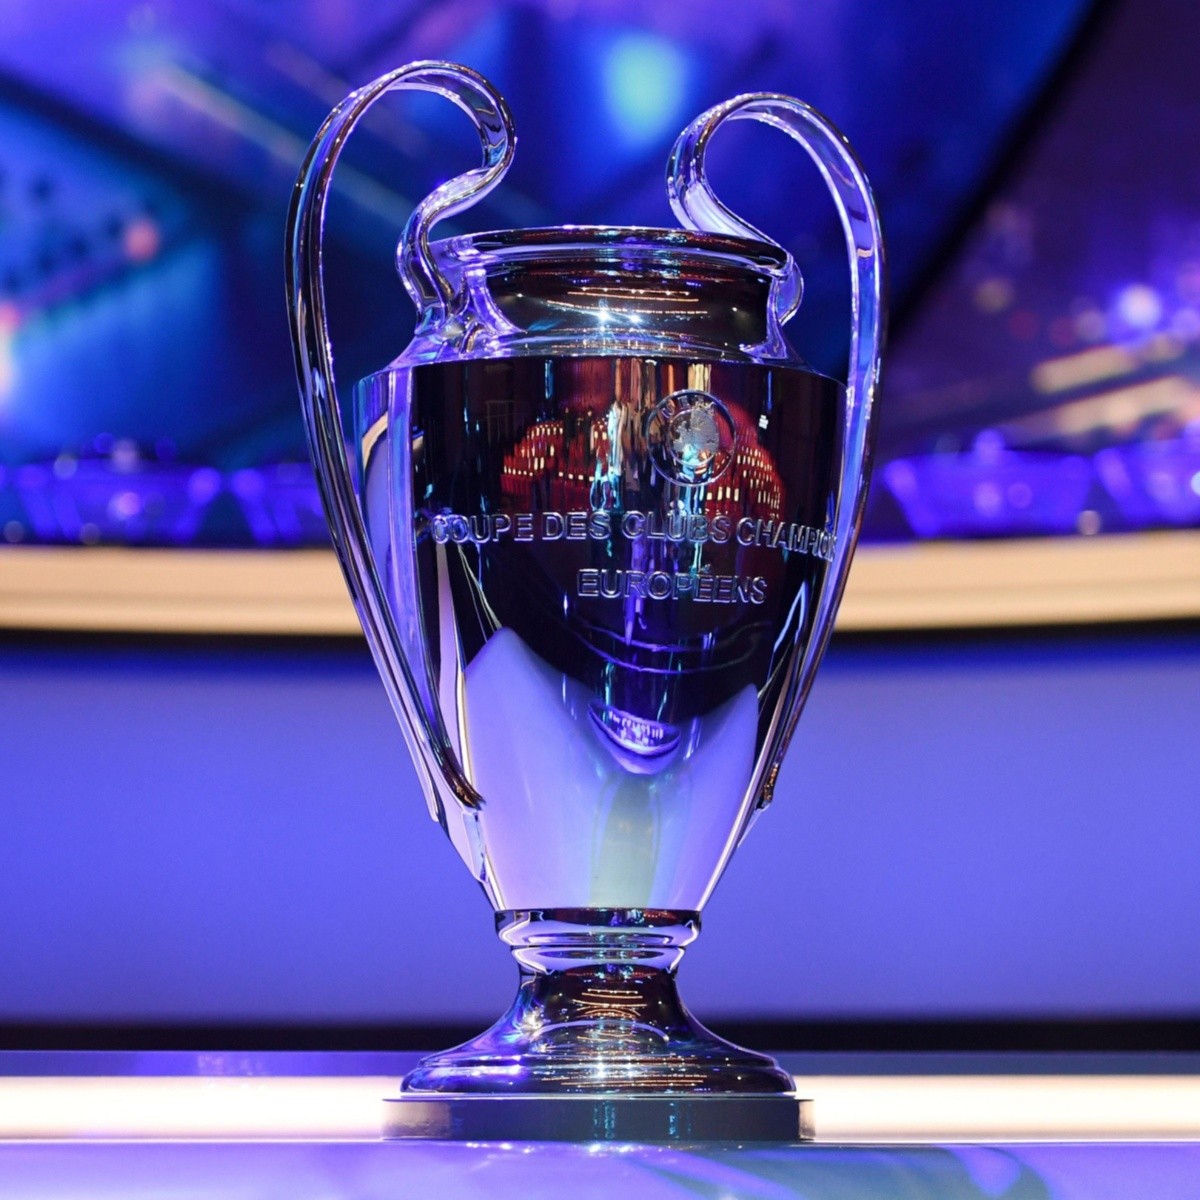 La Orejona': lo que debes saber del trofeo de la Champions League